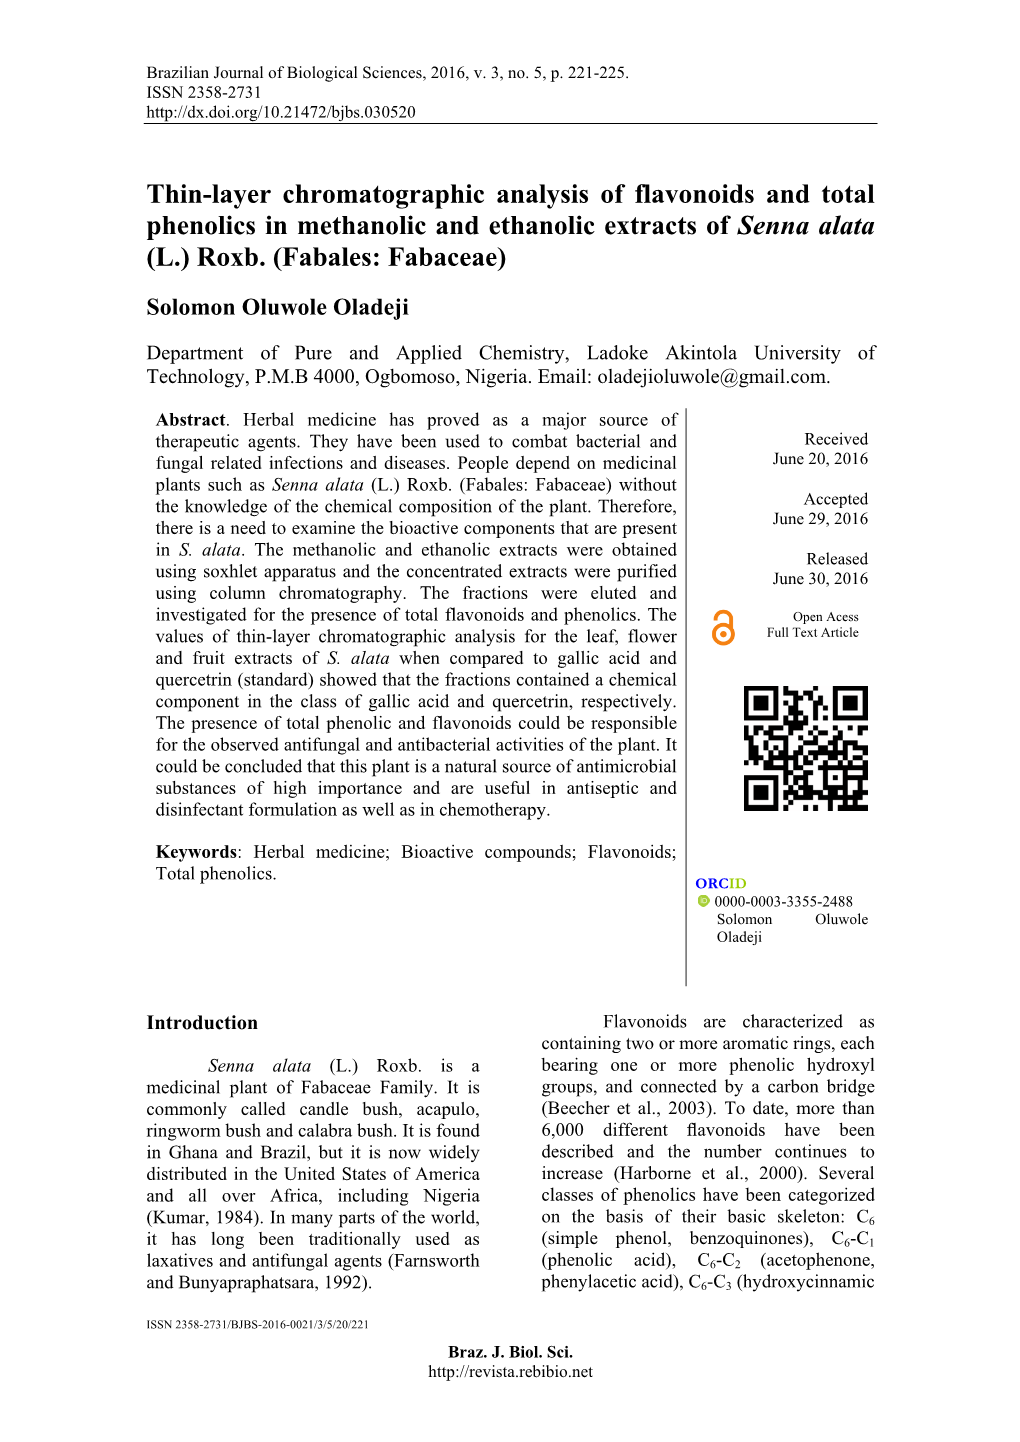 Thin-Layer Chromatographic Analysis of Flavonoids and Total Phenolics in Methanolic and Ethanolic Extracts of Senna Alata (L.) Roxb